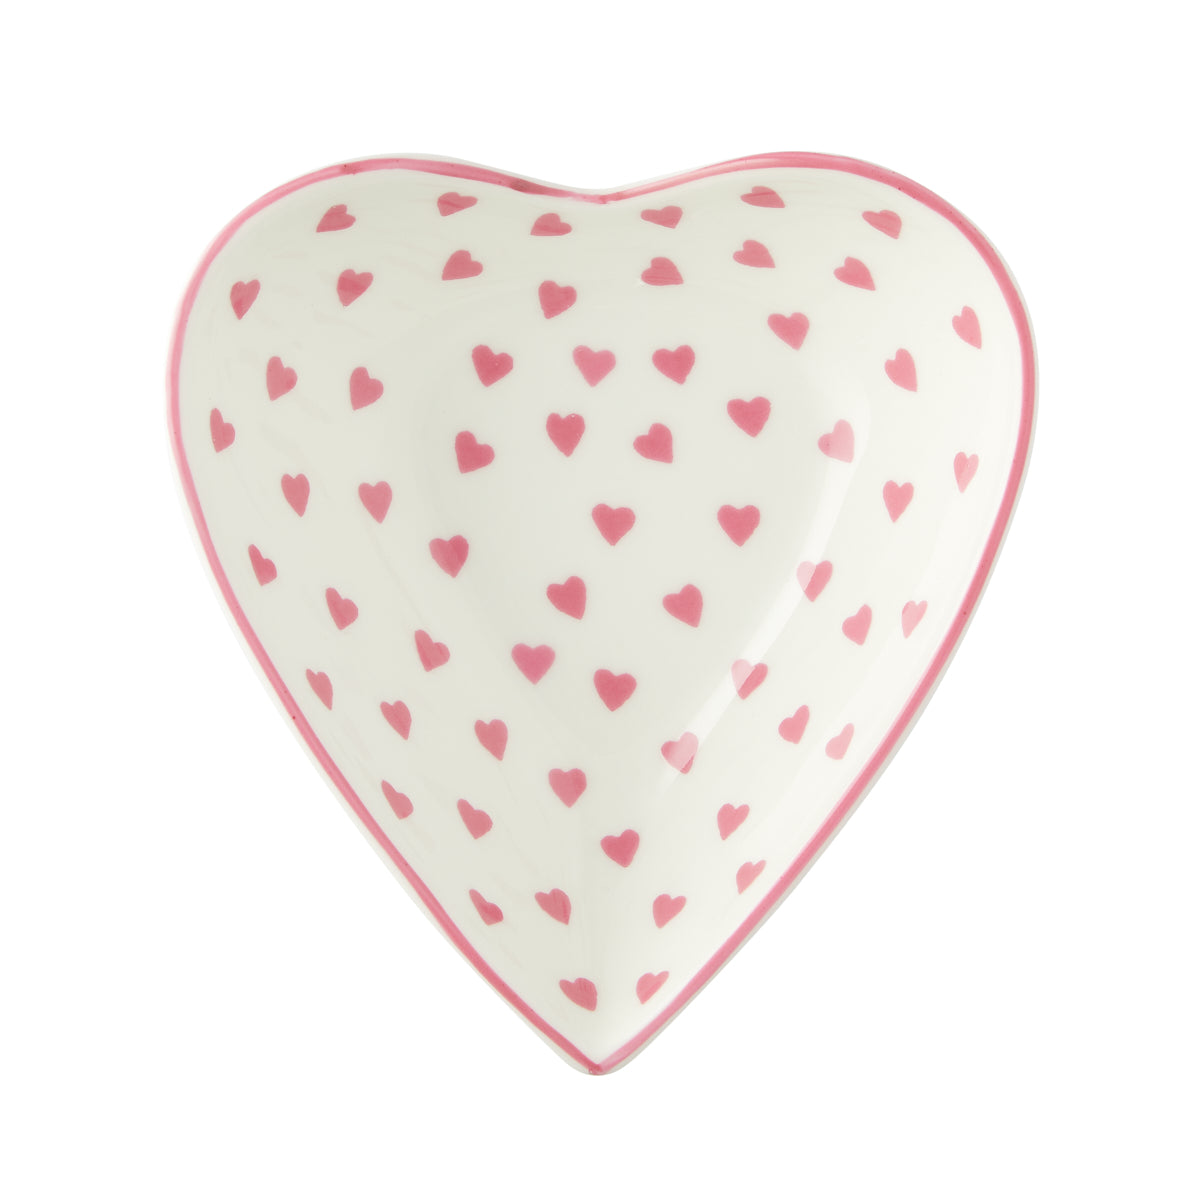 Medium Heart Dish  - Pink Heart